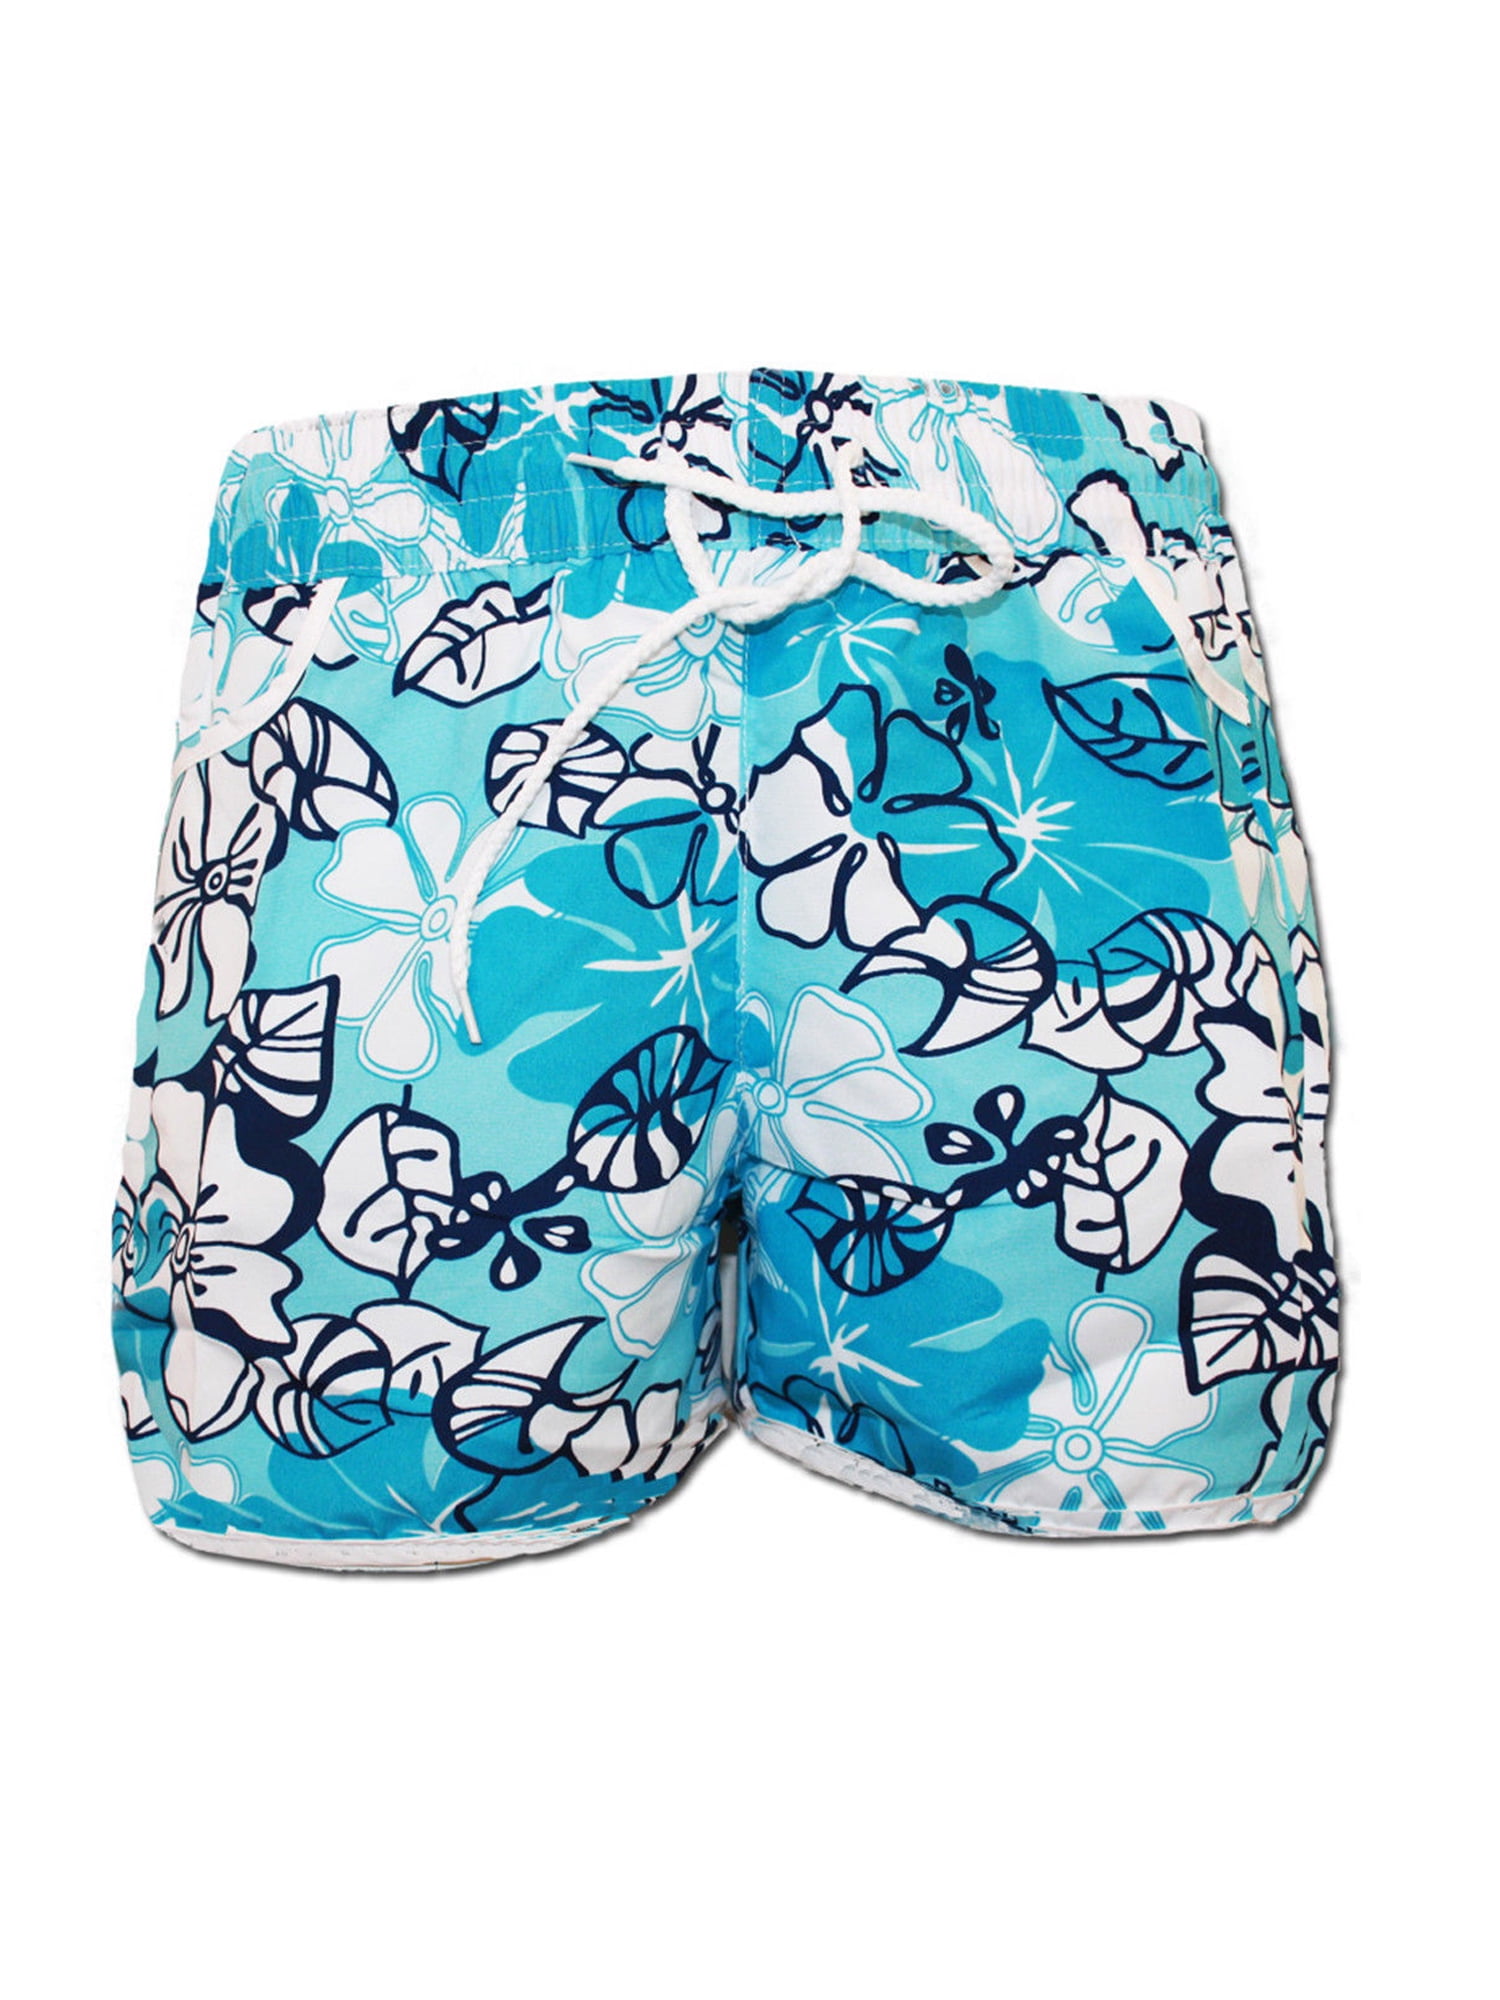 Womens Summer Drawstring Elastic Waist Shorts Floral Print High Waisted Casual Beach Shorts with Pockets